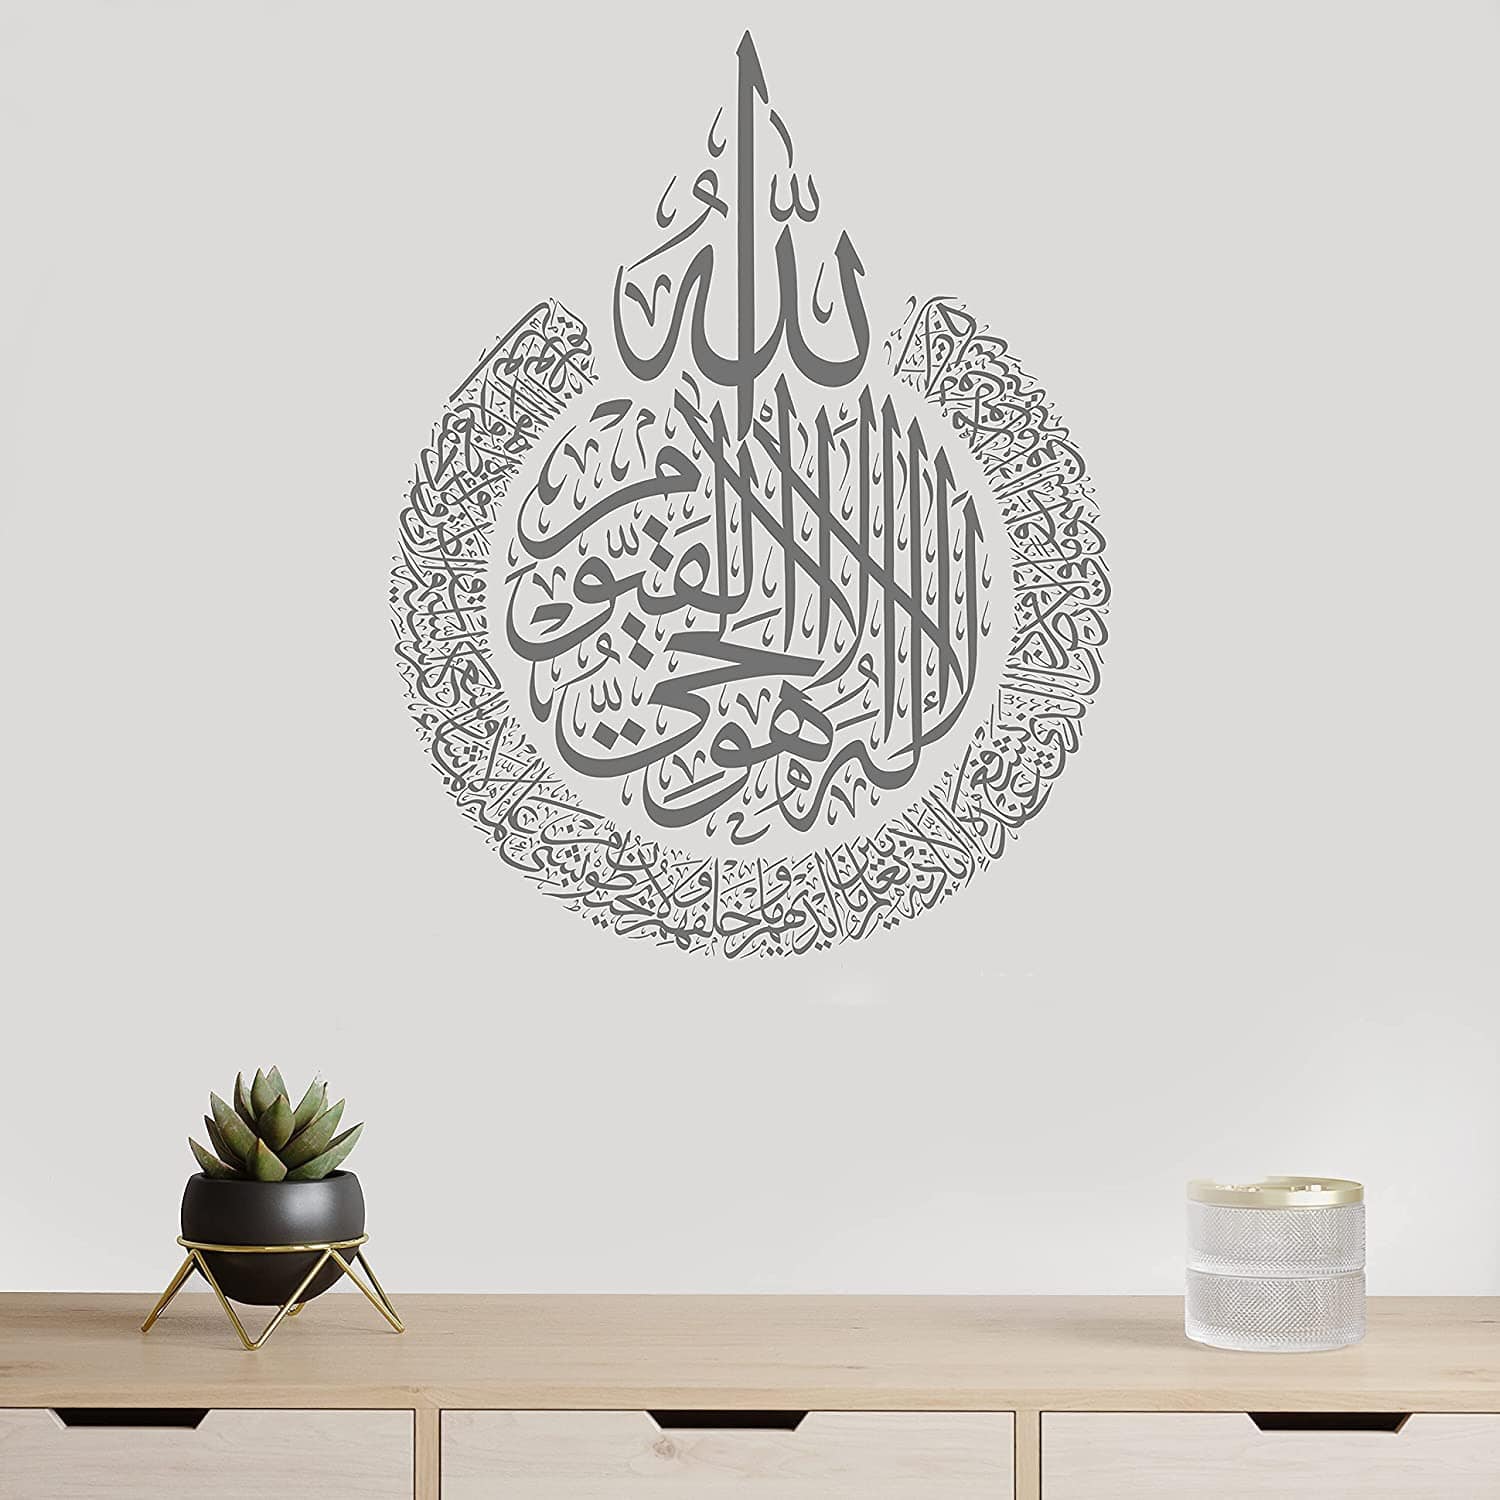 Beau stickers mural islamique ayat al kursi verset du trône calligraphie arabe 